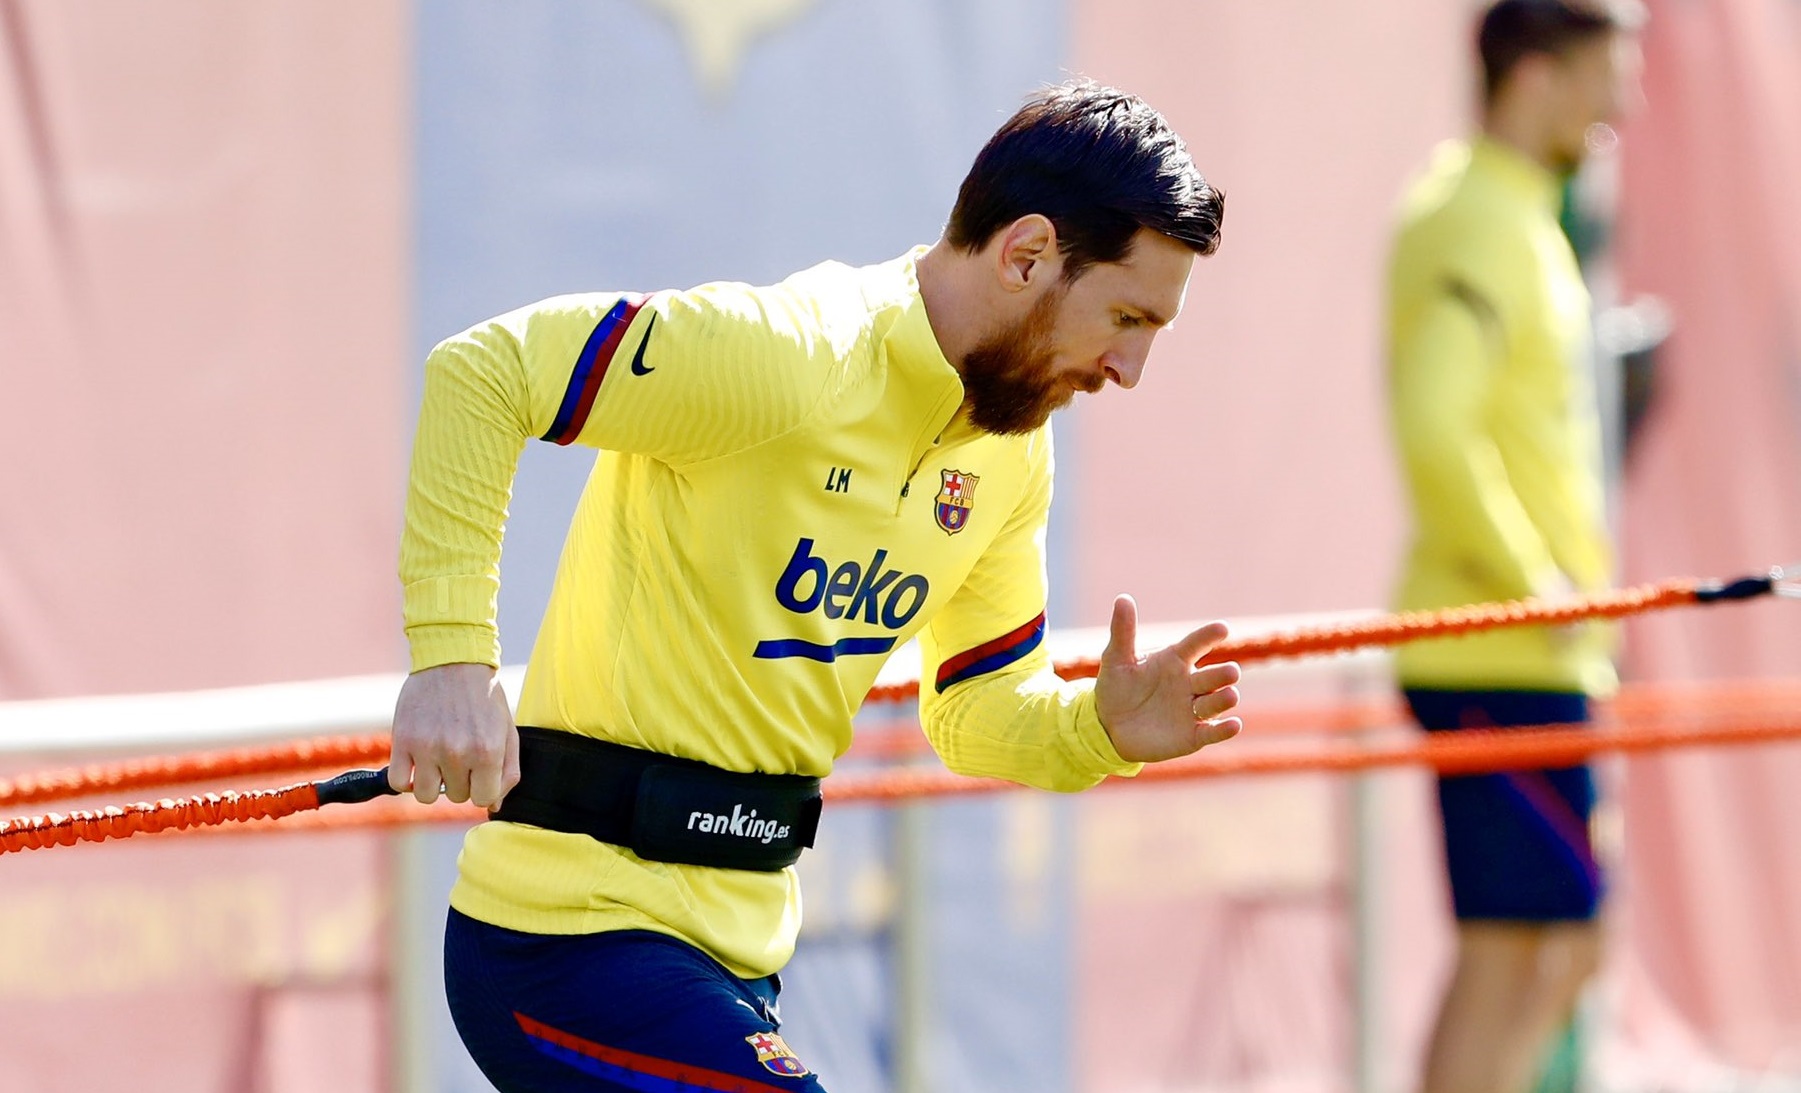 Bintang Barcelona, Lionel Messi. (Foto: Twitter/@FCBarcelona)